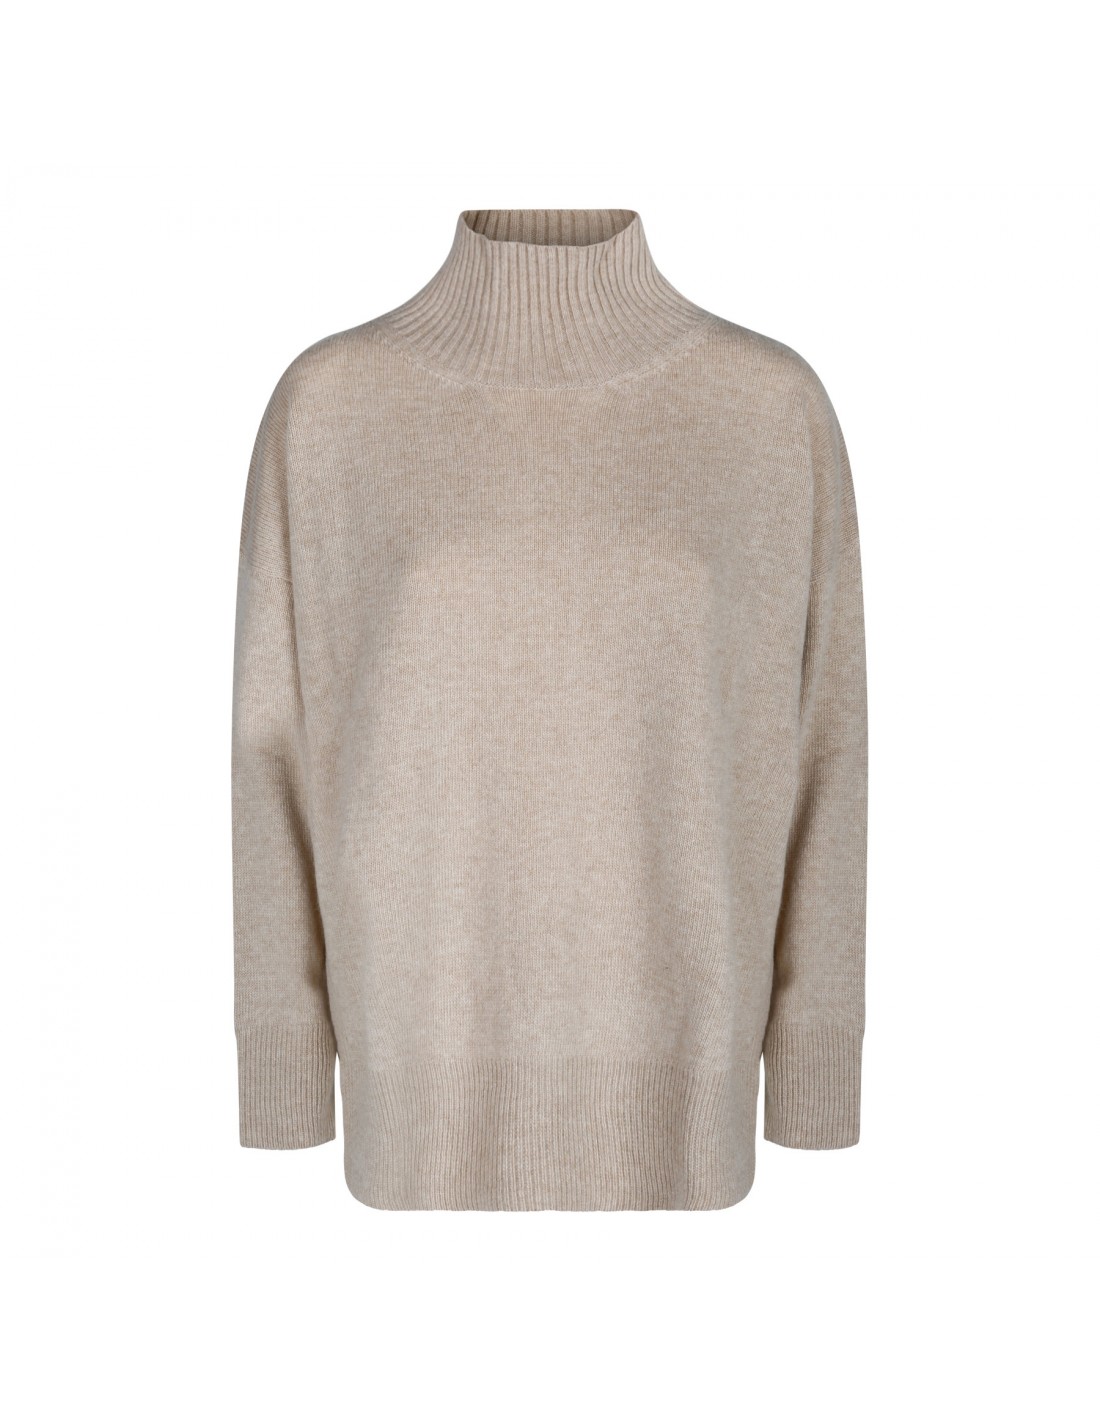 Light beige merino and cashmere blend sweater